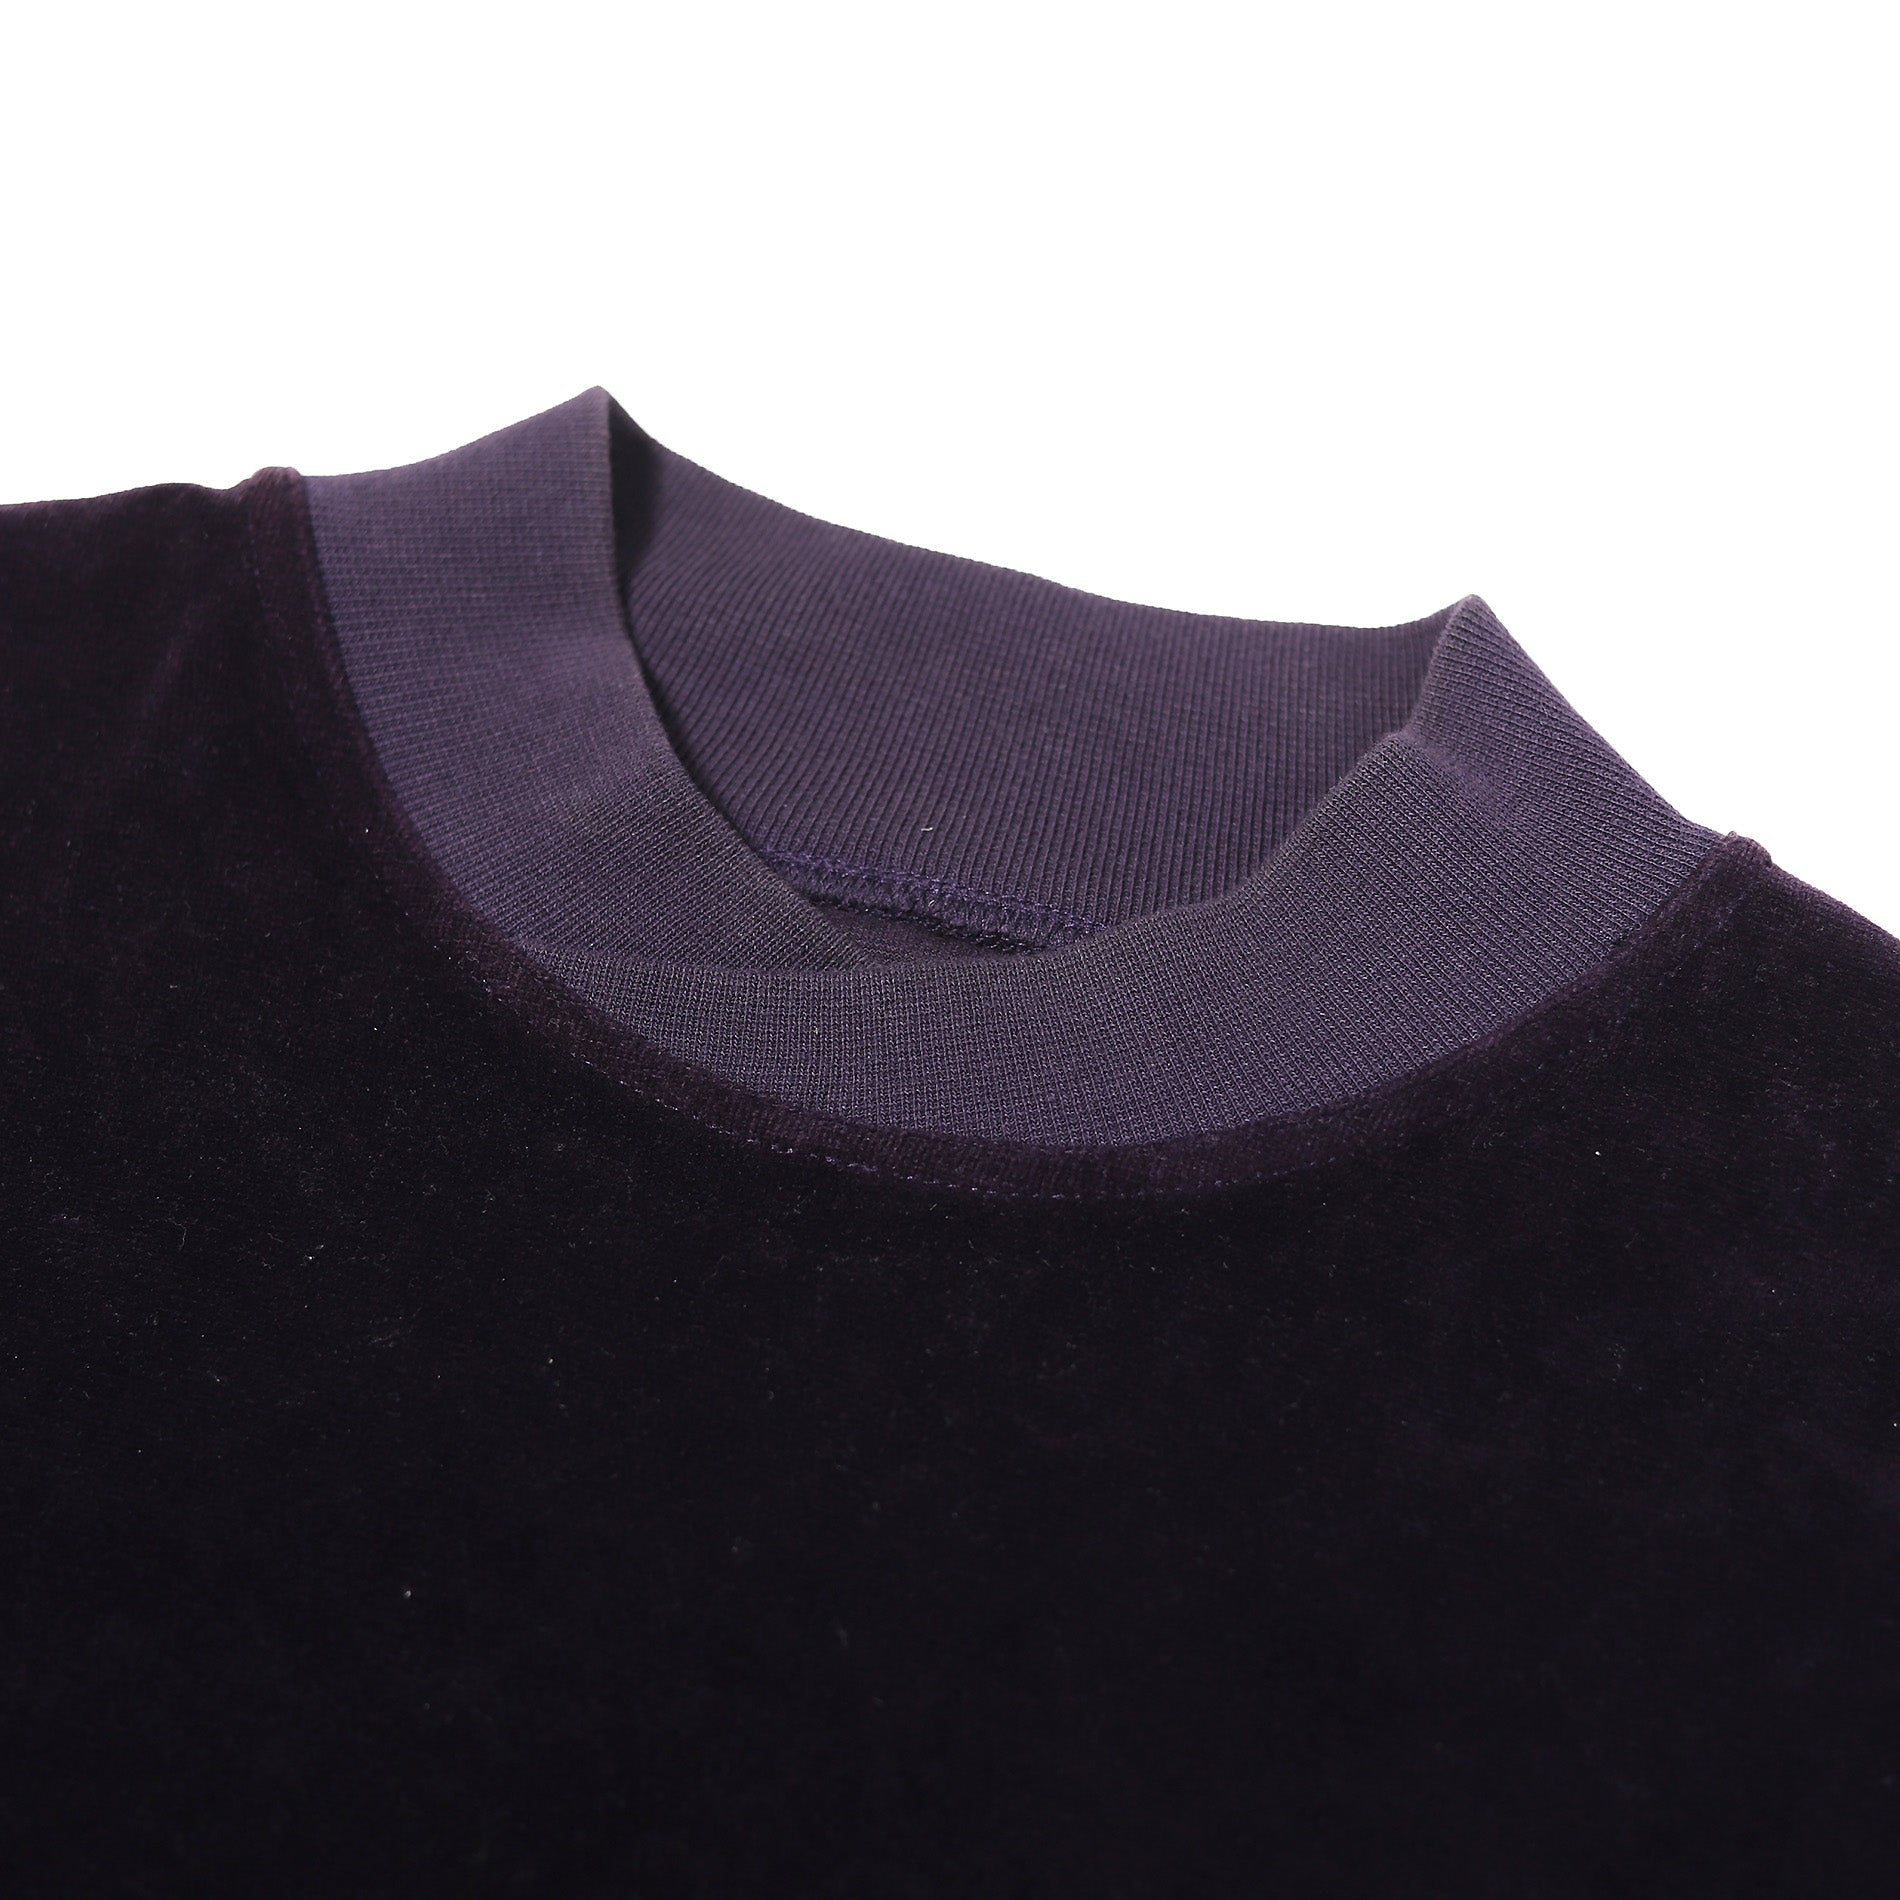 Haider Ackermann FW15 Purple Velvet Sweatshirt